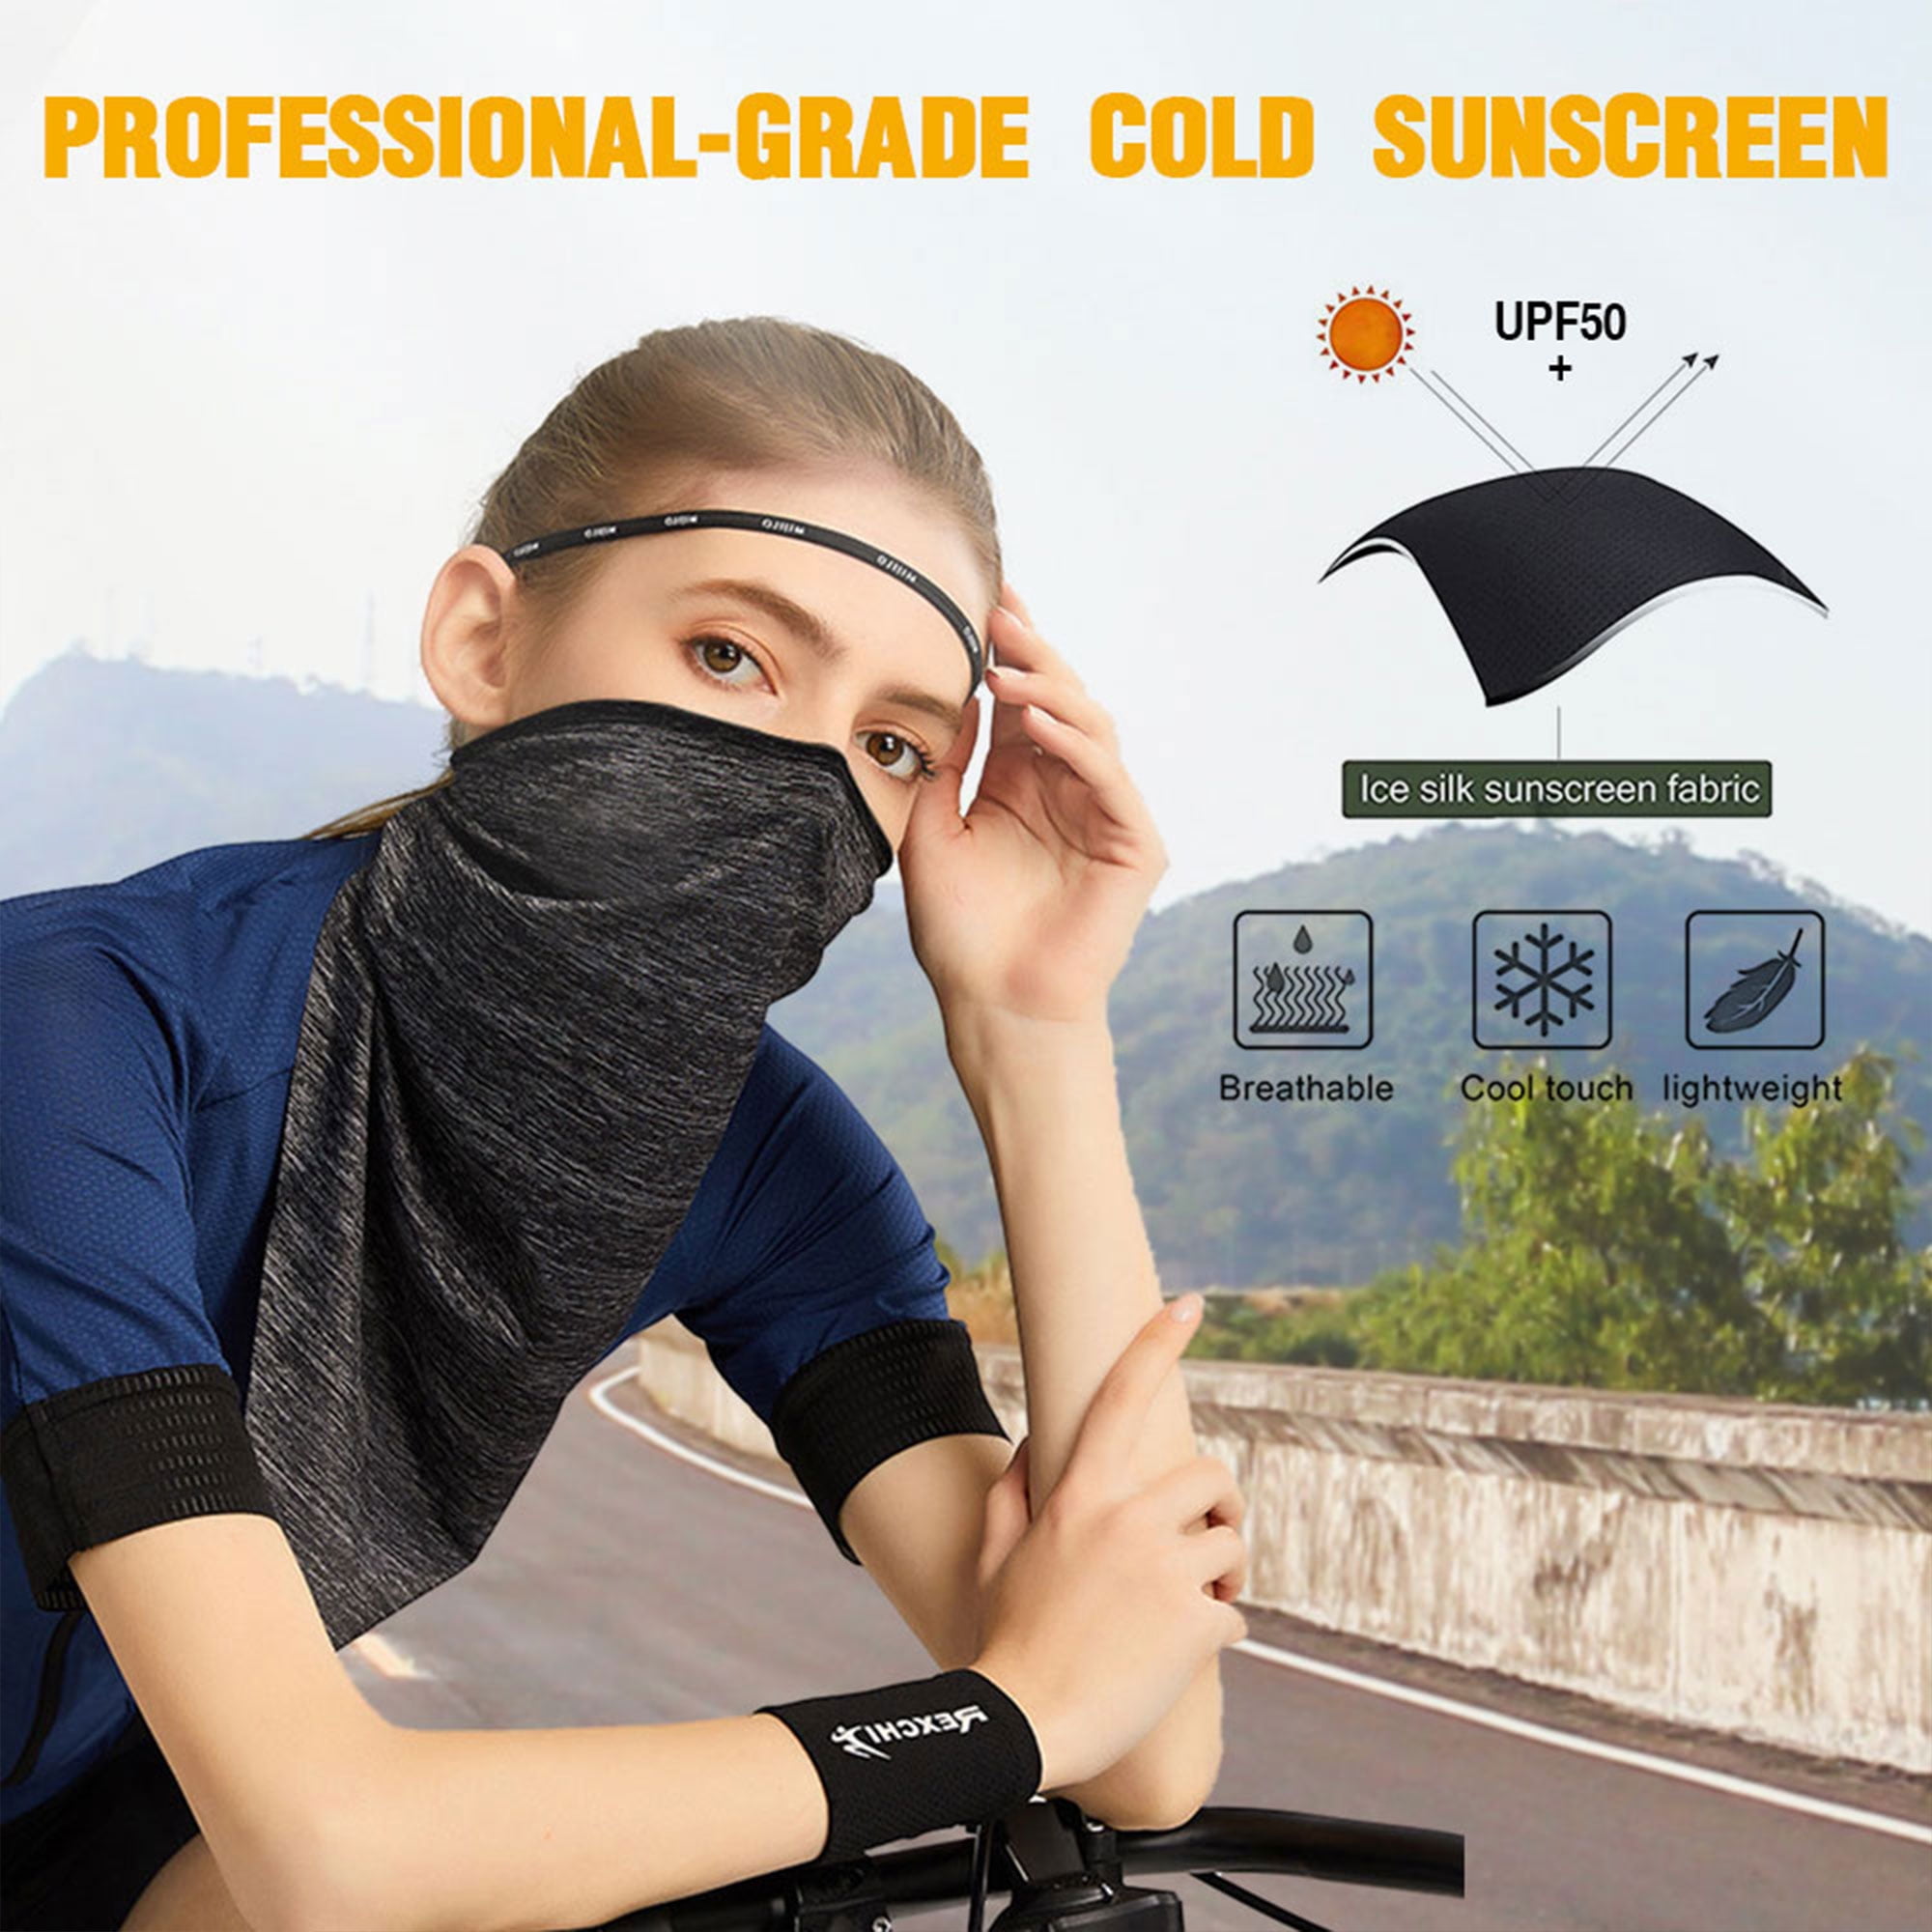 Tube Windproof Mask Ice Silk Face Cover for Dust UV Wind Outdoors 2 Pcs Face Scarf Bandana Neck Gaiter Balaclava Headwear